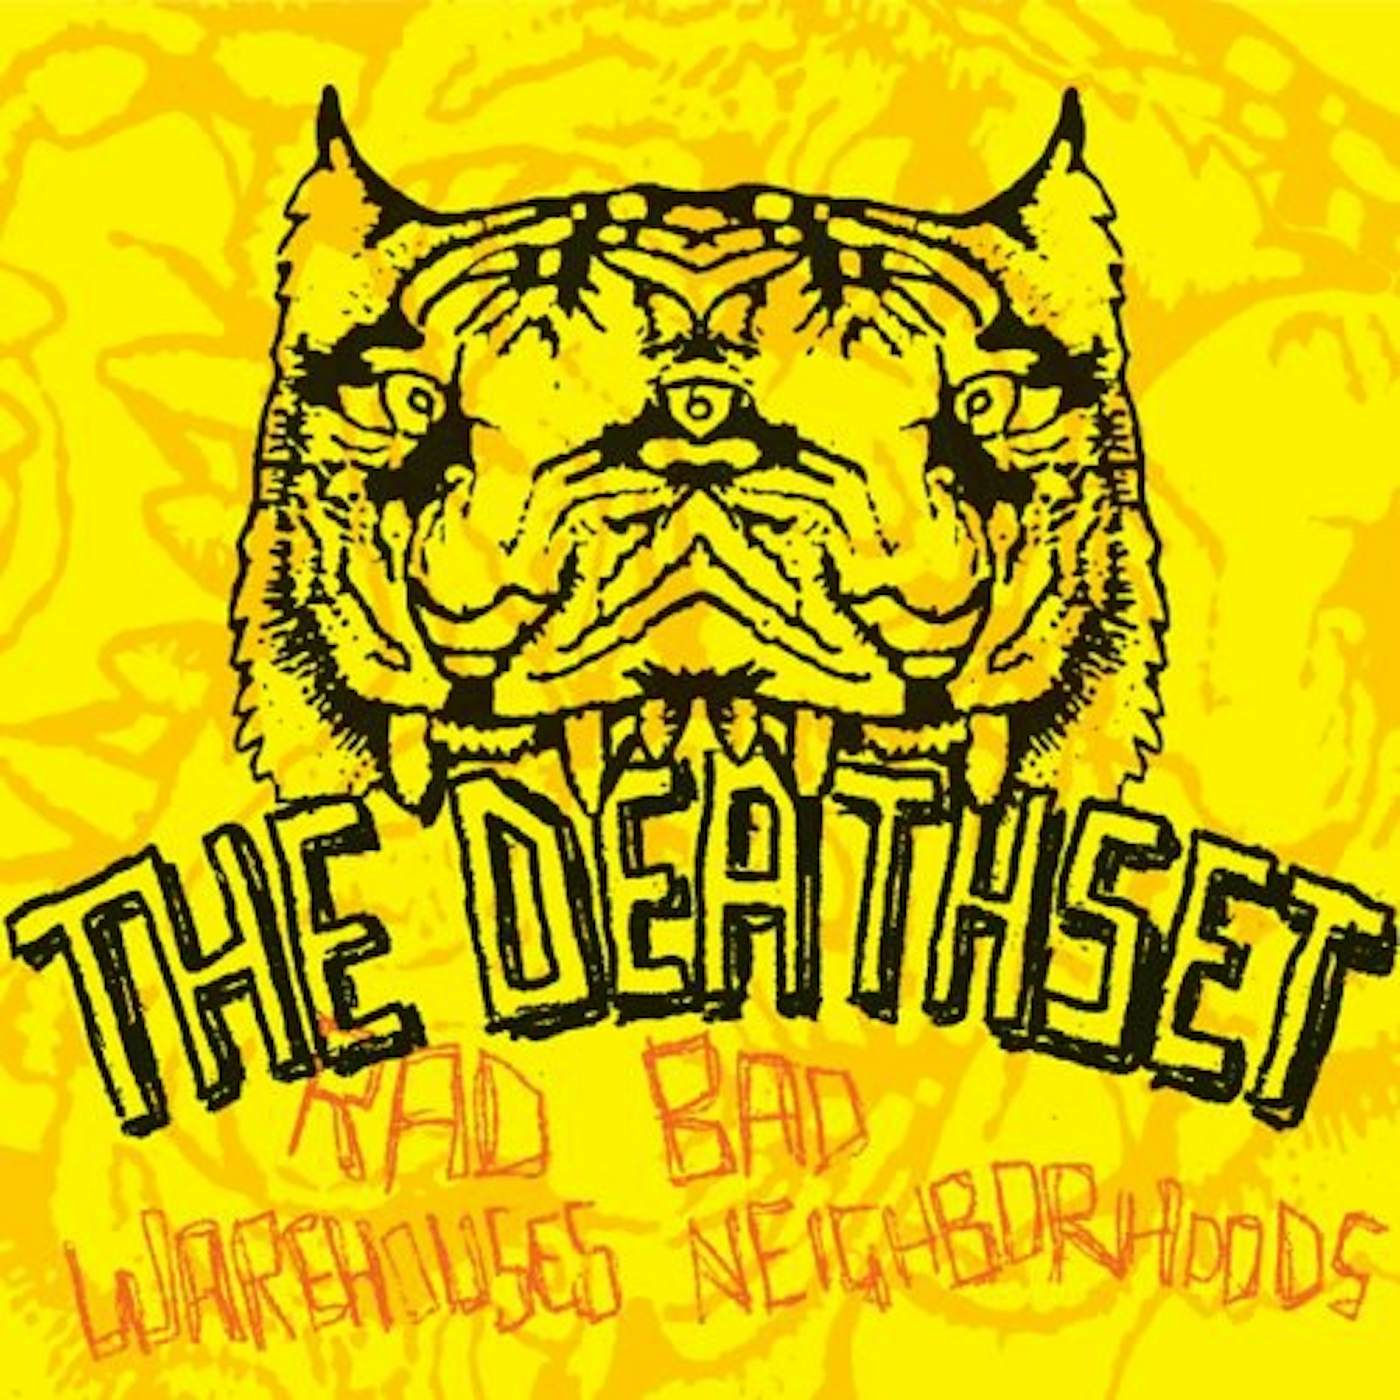 The Death Set RAD WAREHOUSES BAD NEIGHBORHOODS CD